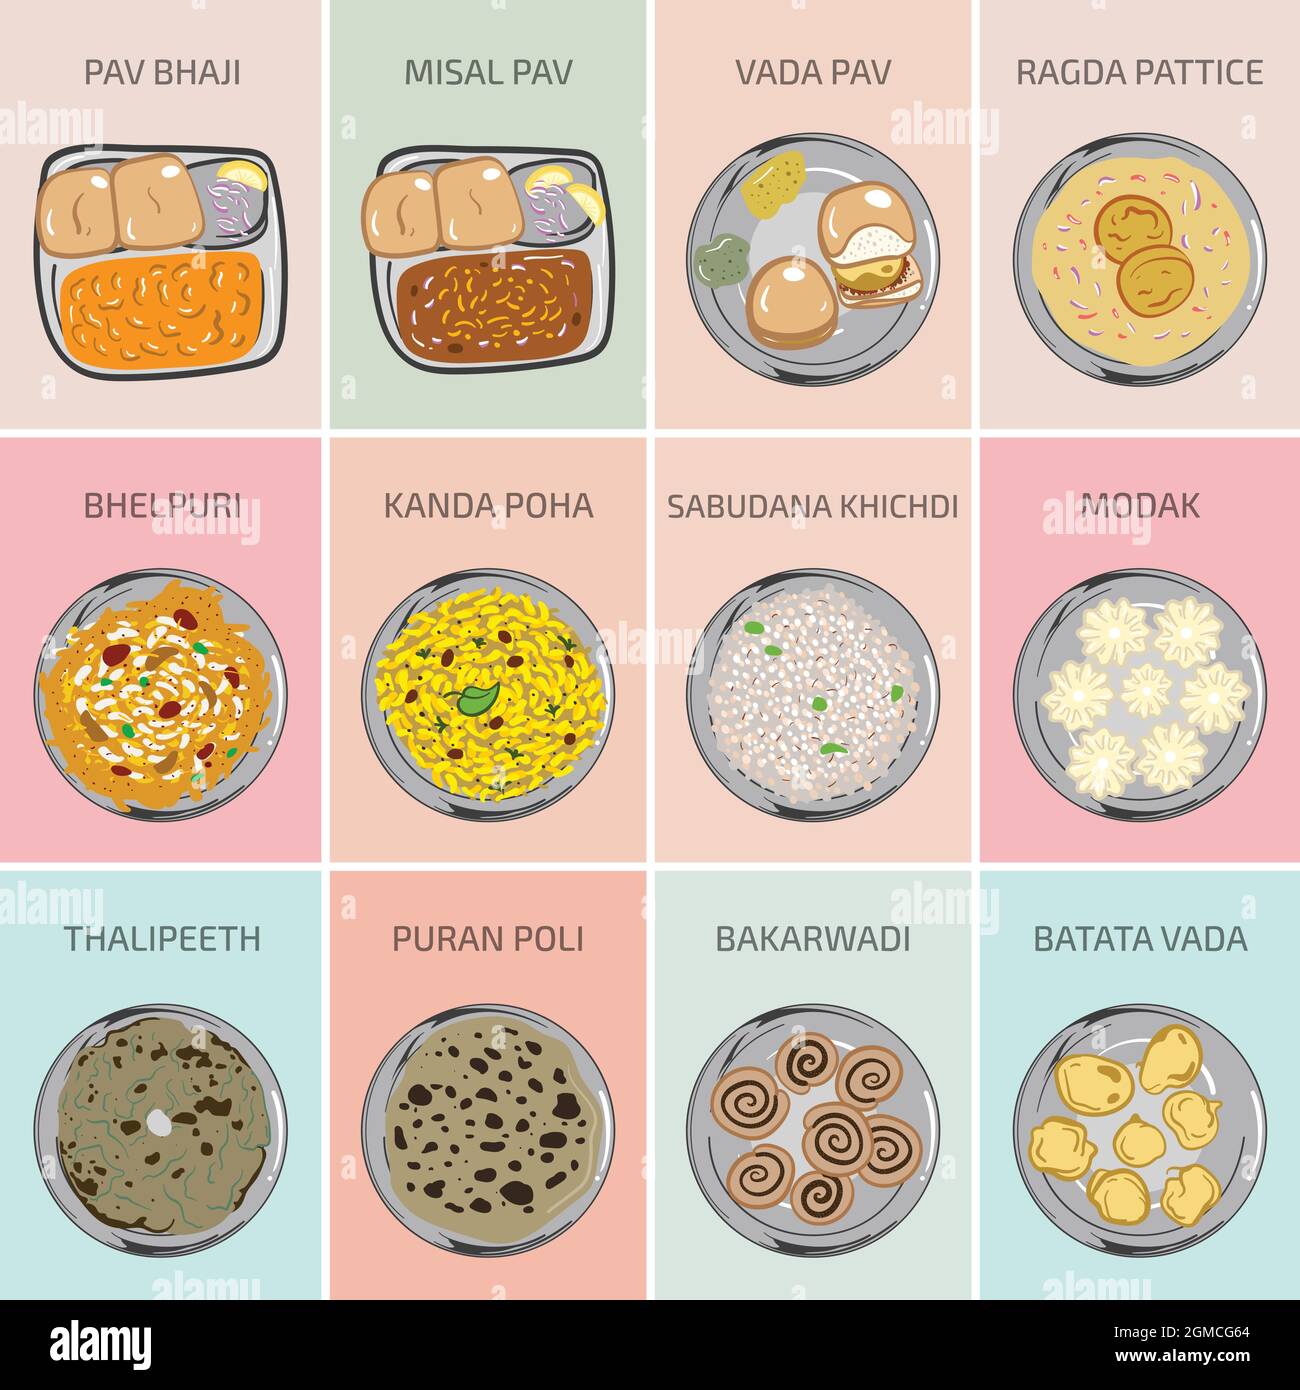 Indische Lebensmittel Vektorgrafiken. Marathi Maharashtra Food. Hauptgericht Frühstück, Mittag- und Abendessen in Indien. Vada Pav Misal Pav Pav Bhaji Kanda Poha Stock Vektor